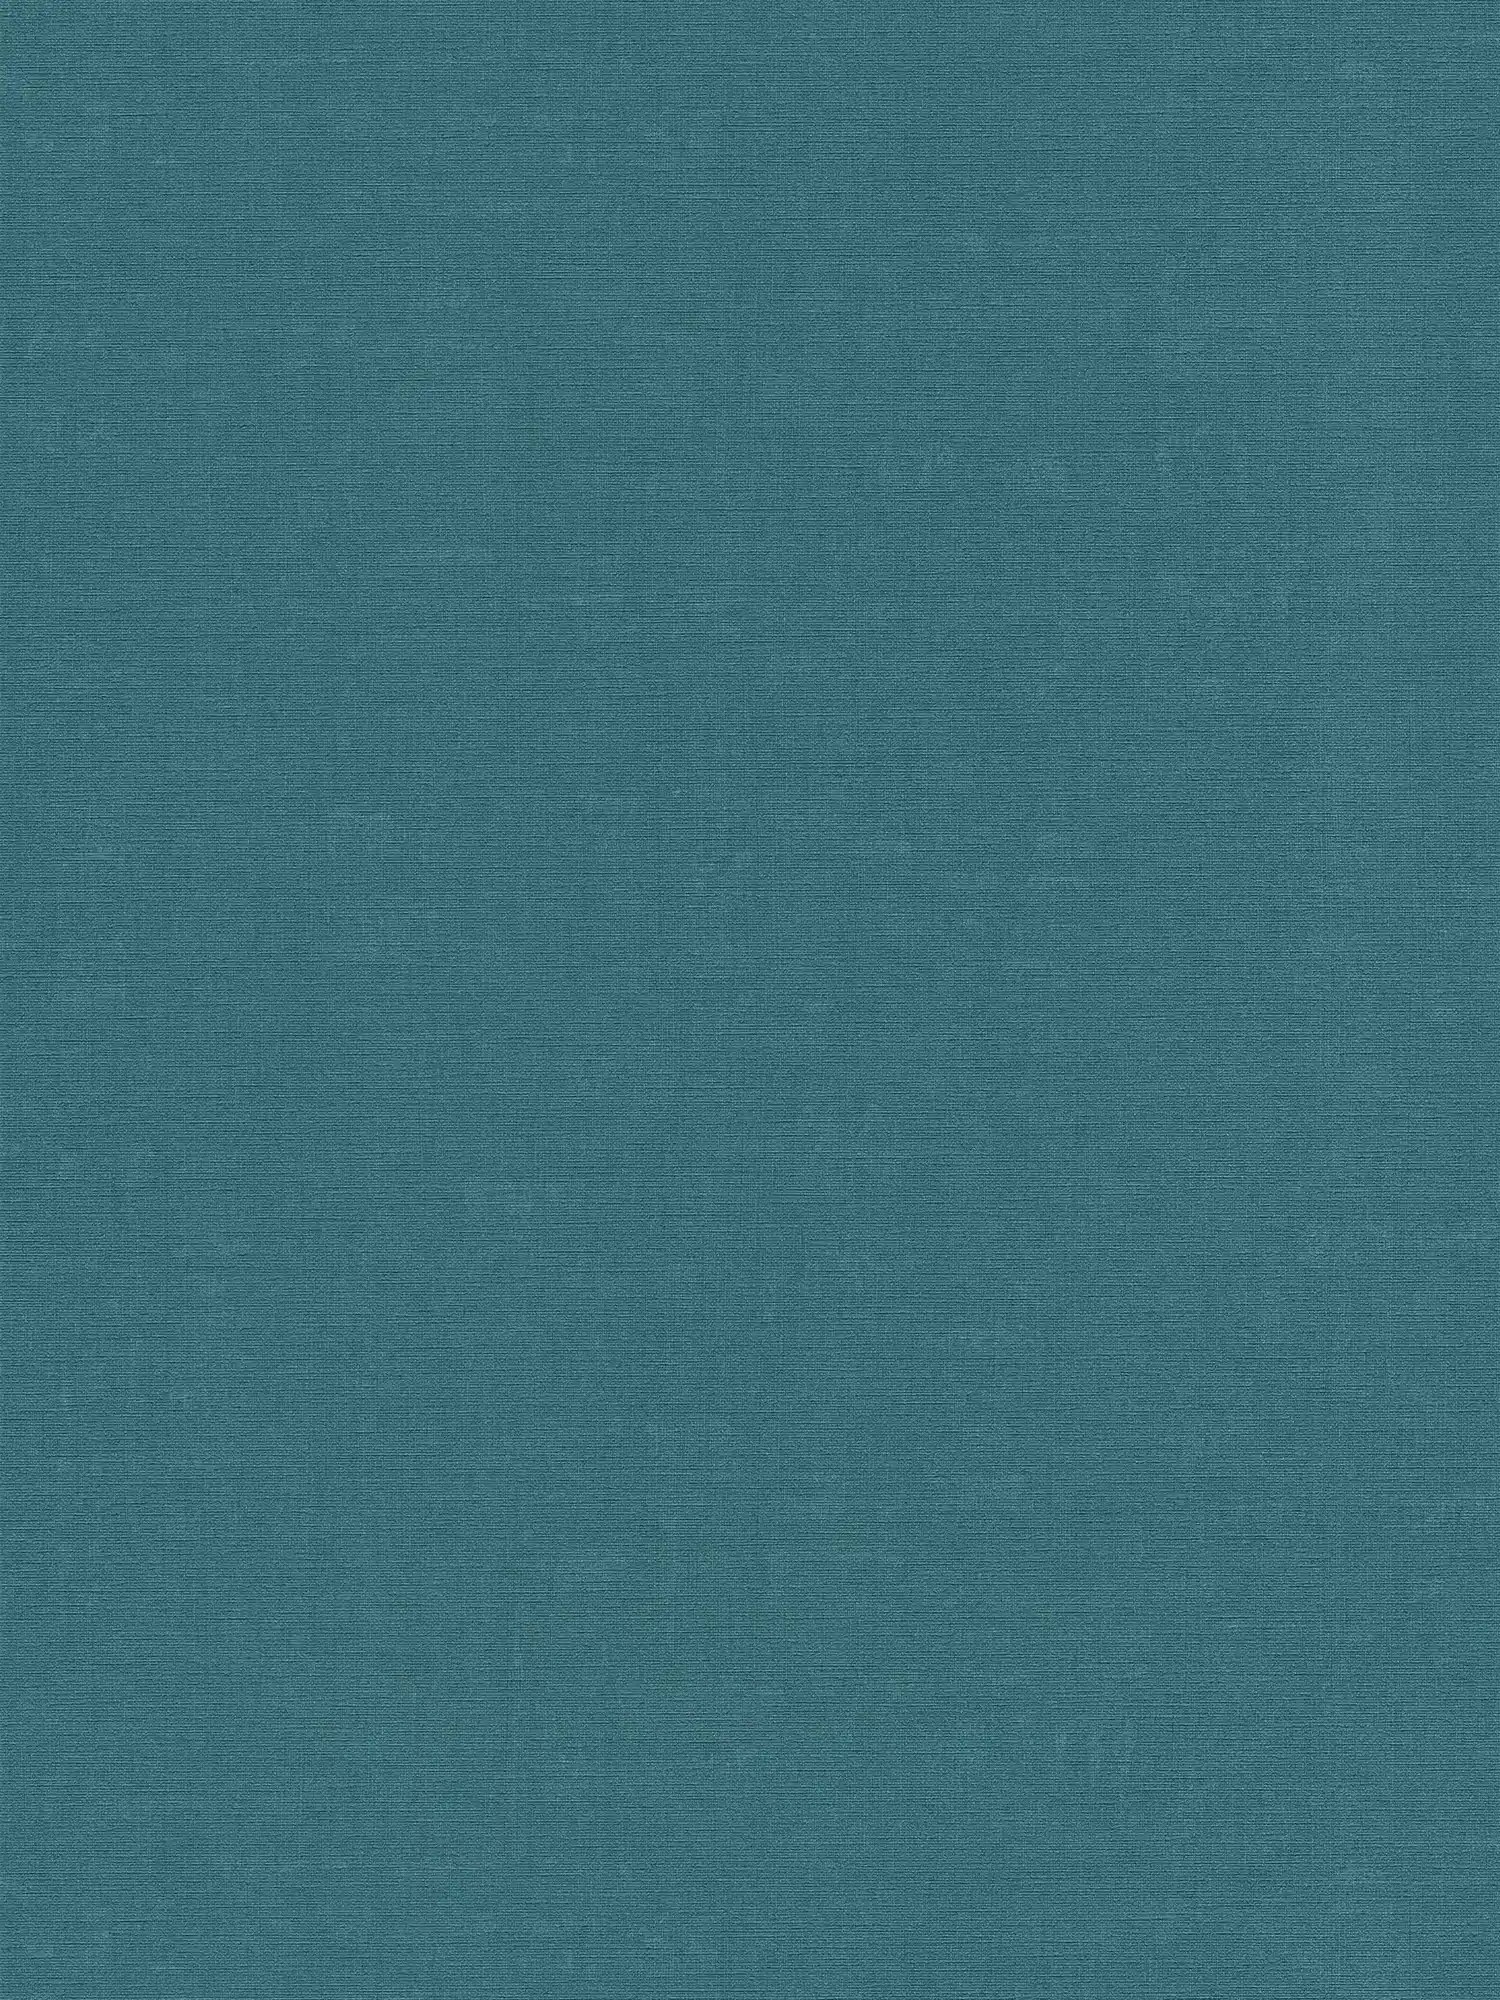 Papier peint intissé uni effet chiné - bleu, vert
